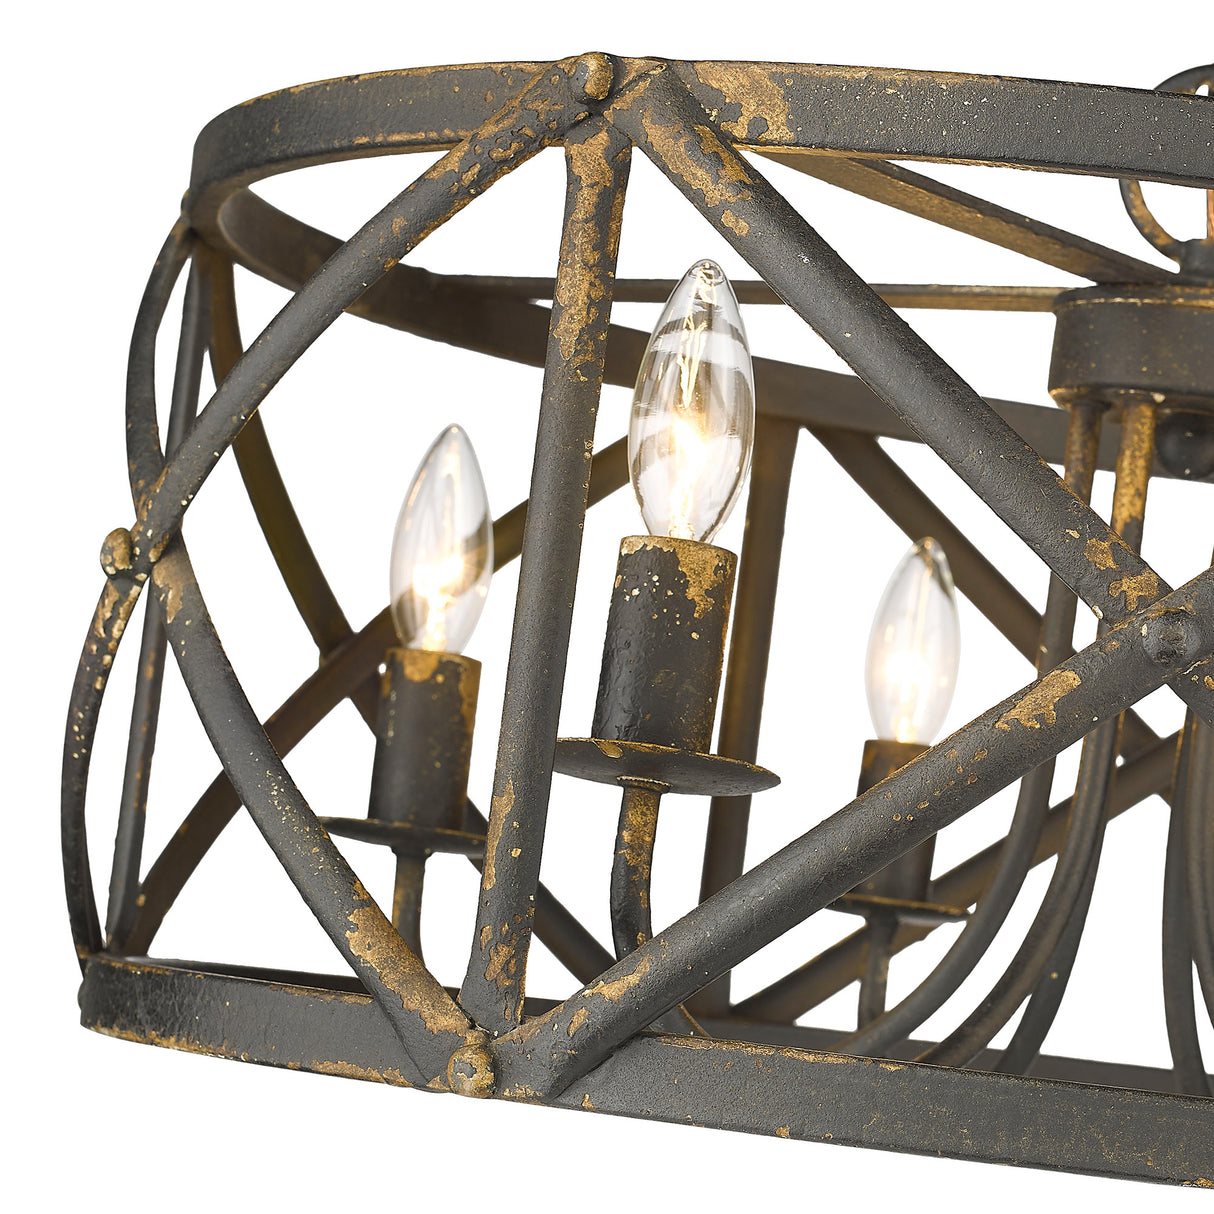 Alcott 6 Light Chandelier in Antique Black Iron